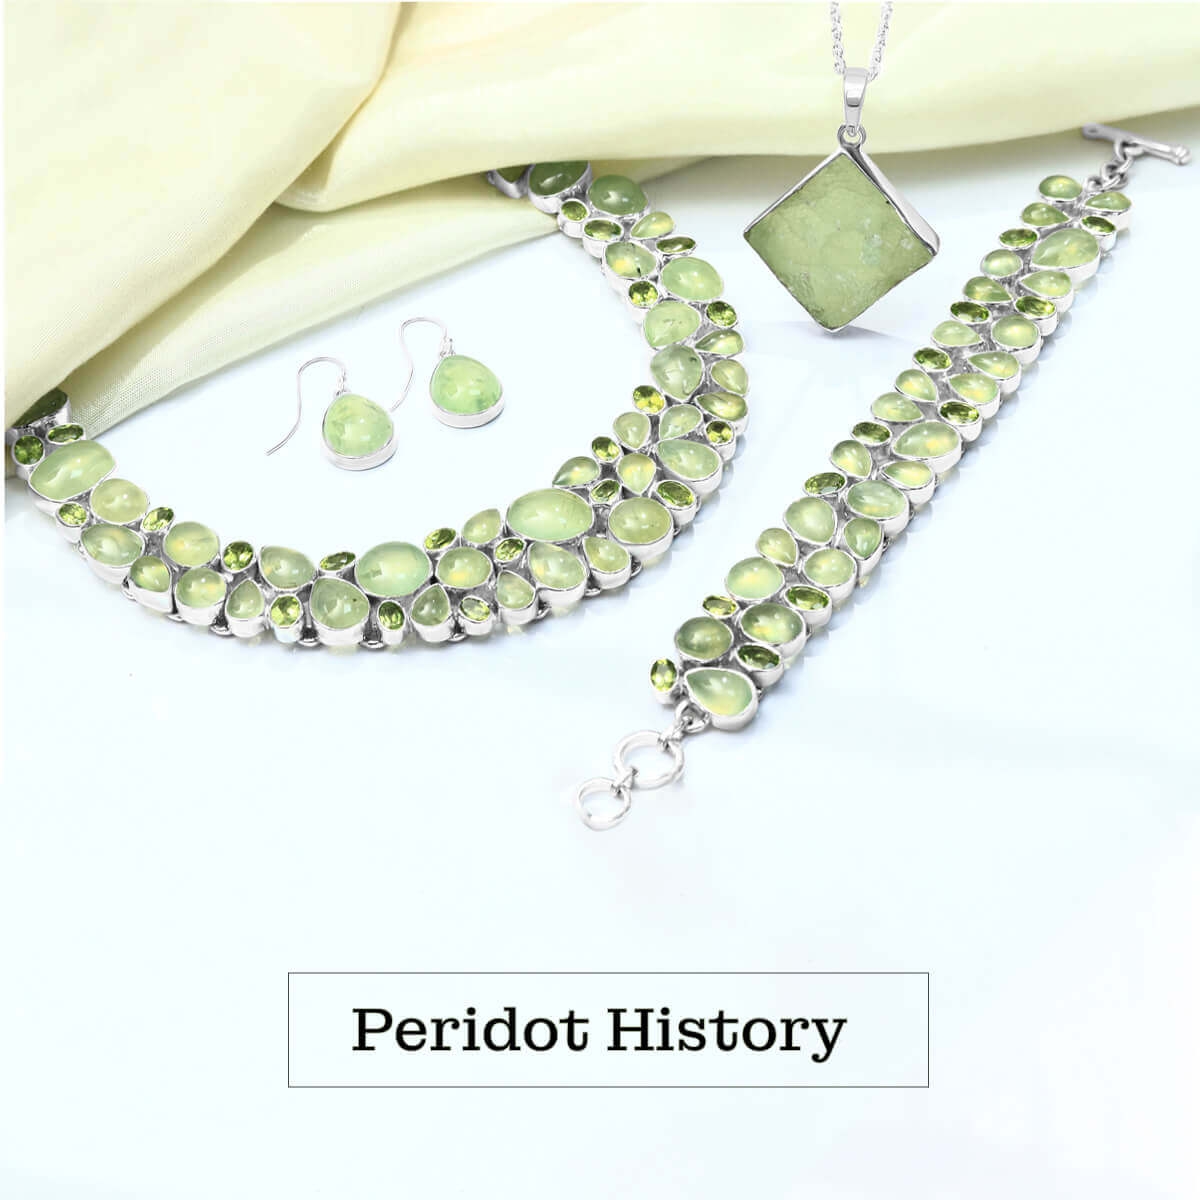 History of Peridot